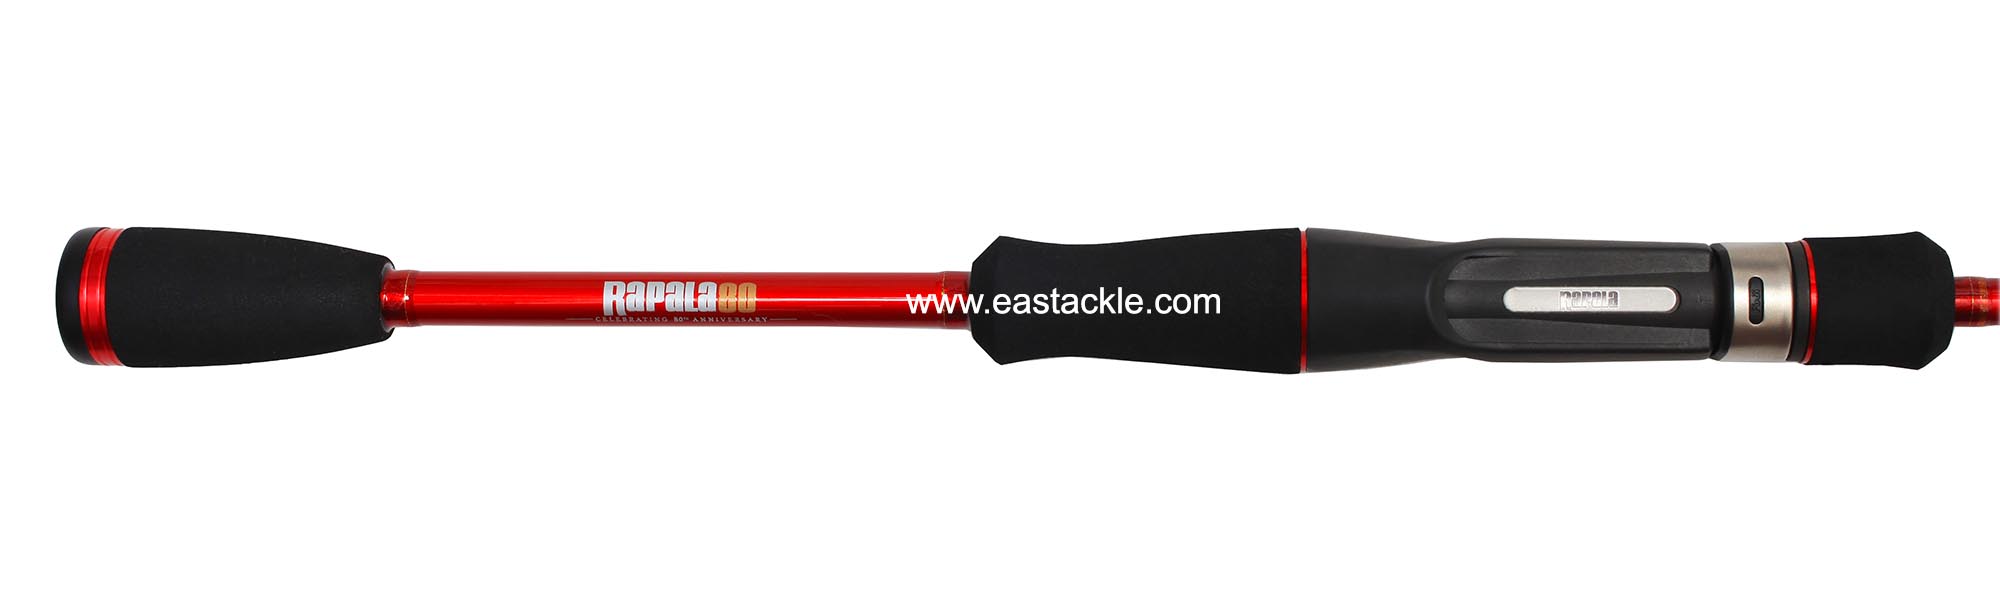 Rapala - Vaaksy - VAC662MH - Baitcasting Rod - Handle Section - Top View | Eastackle